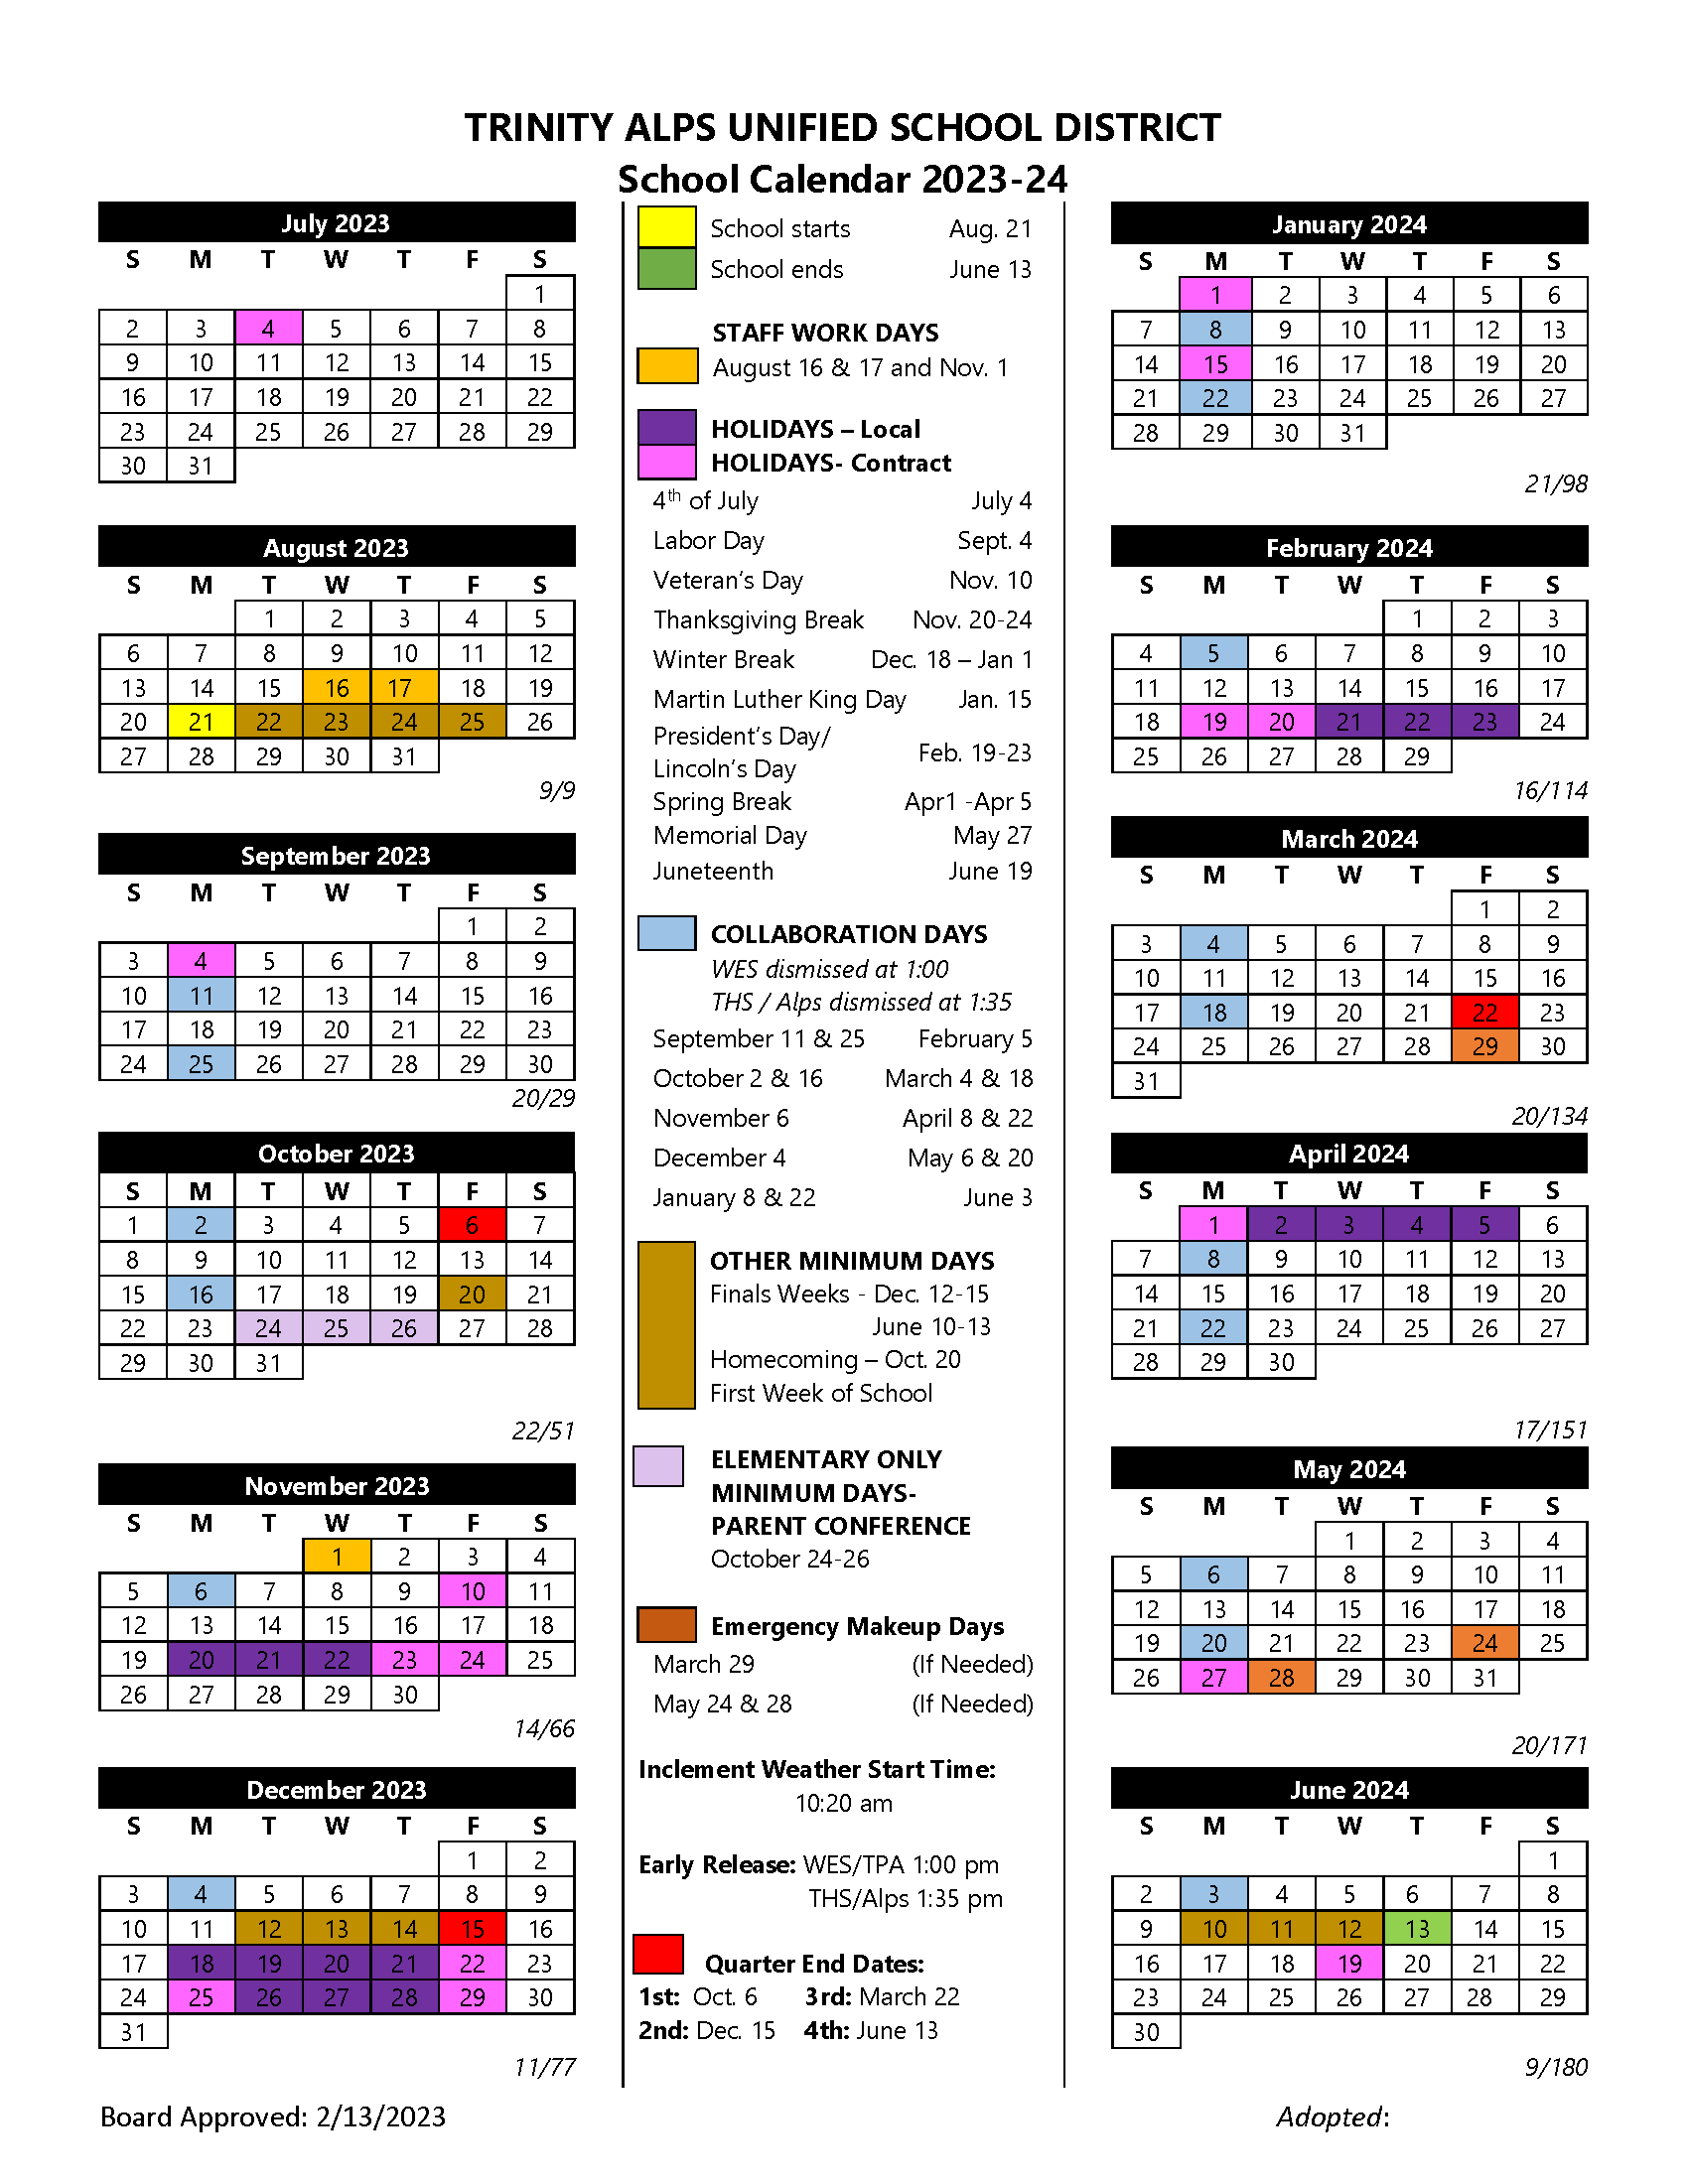 image of tausd calendar